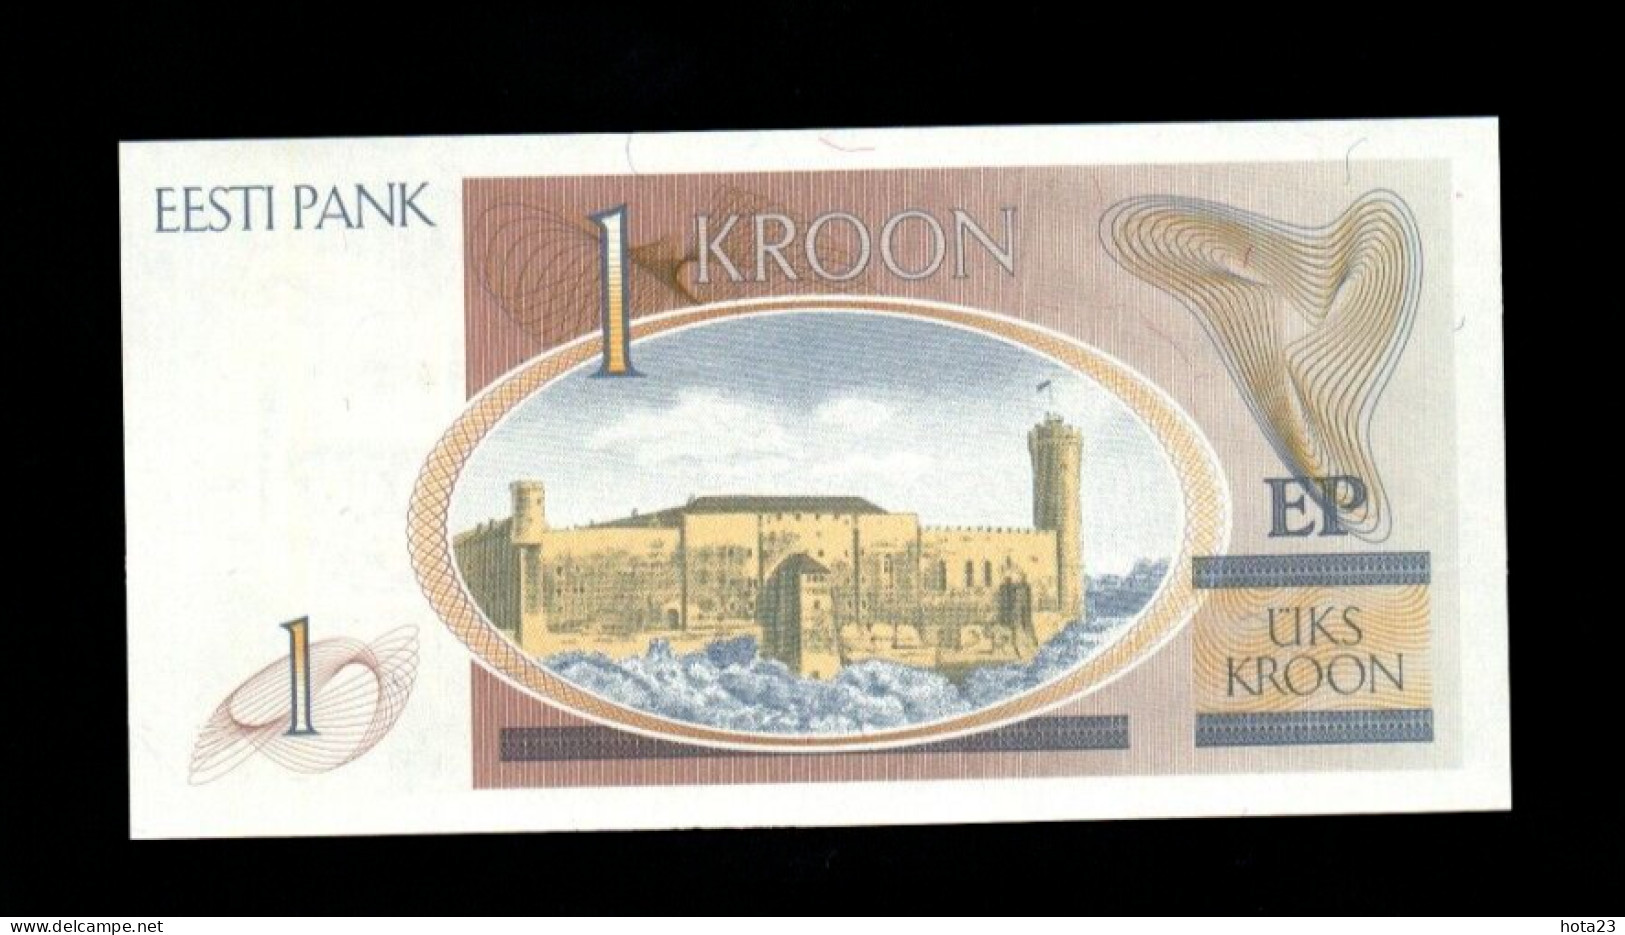 1 KROON UNC BANKNOTE FROM ESTONIA 1992 PICK-69 - Estland